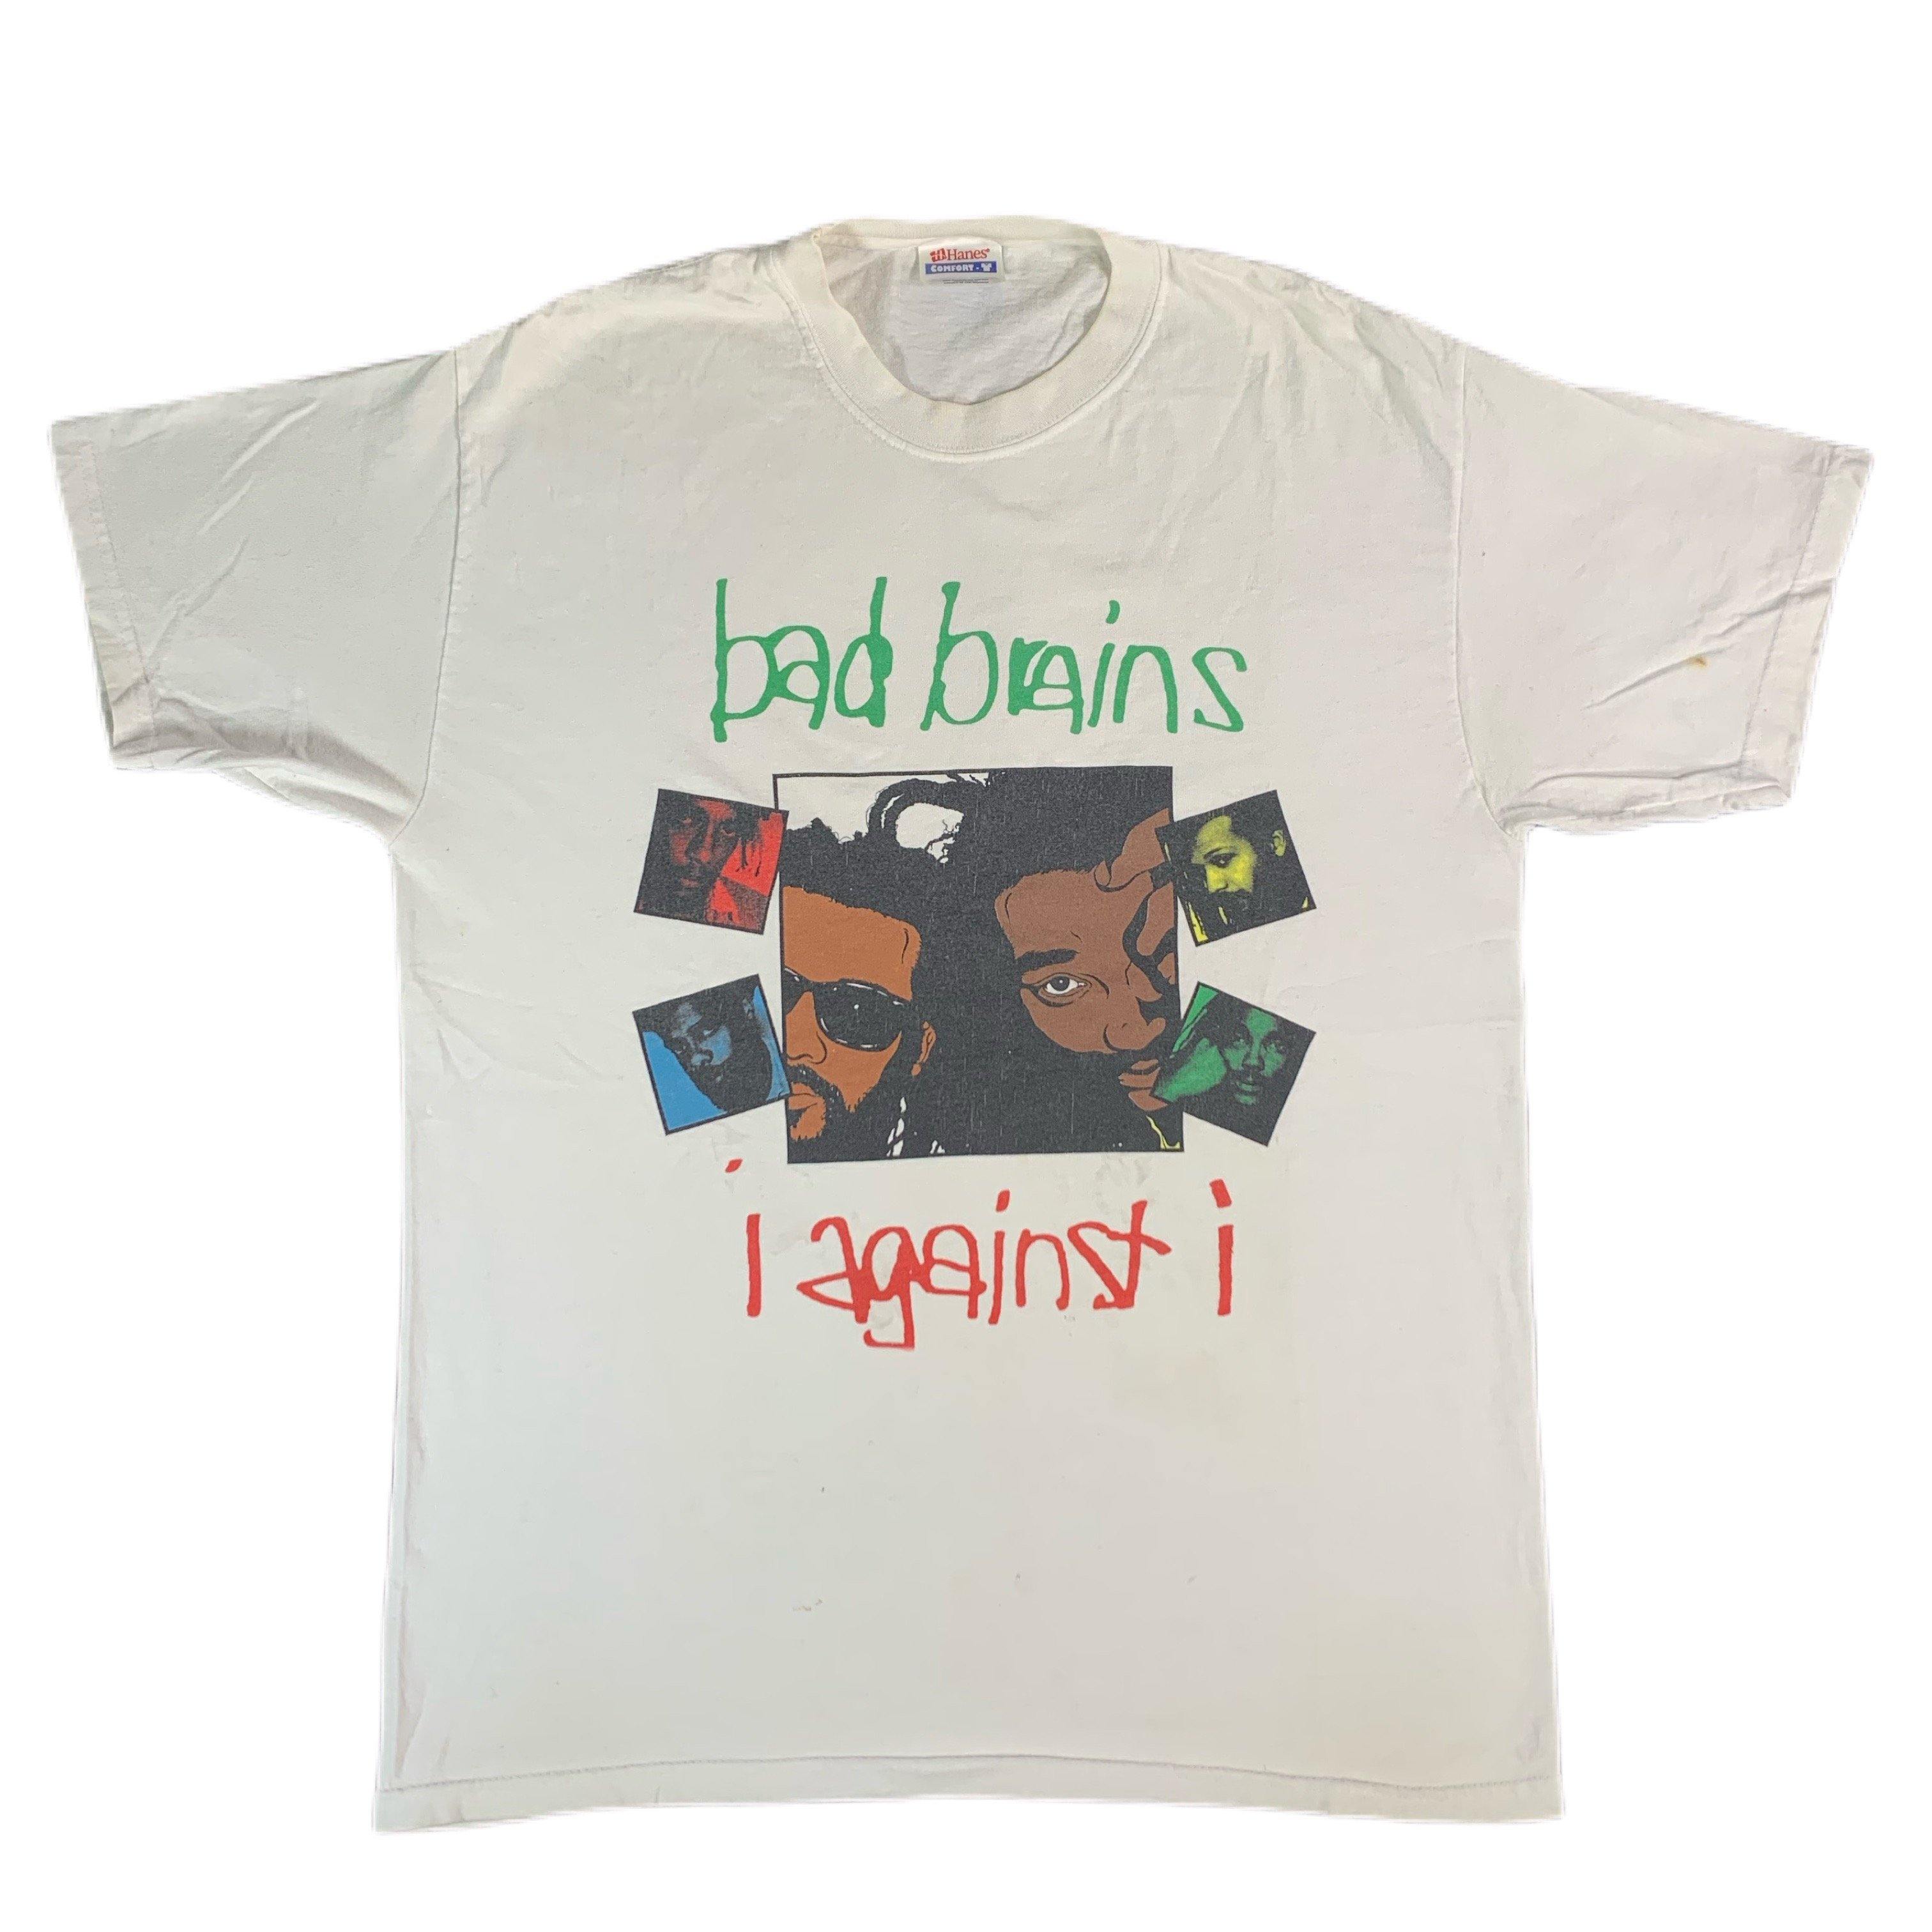 BAD BRAINS] Vintage Official License Print T-Shirt [2010s